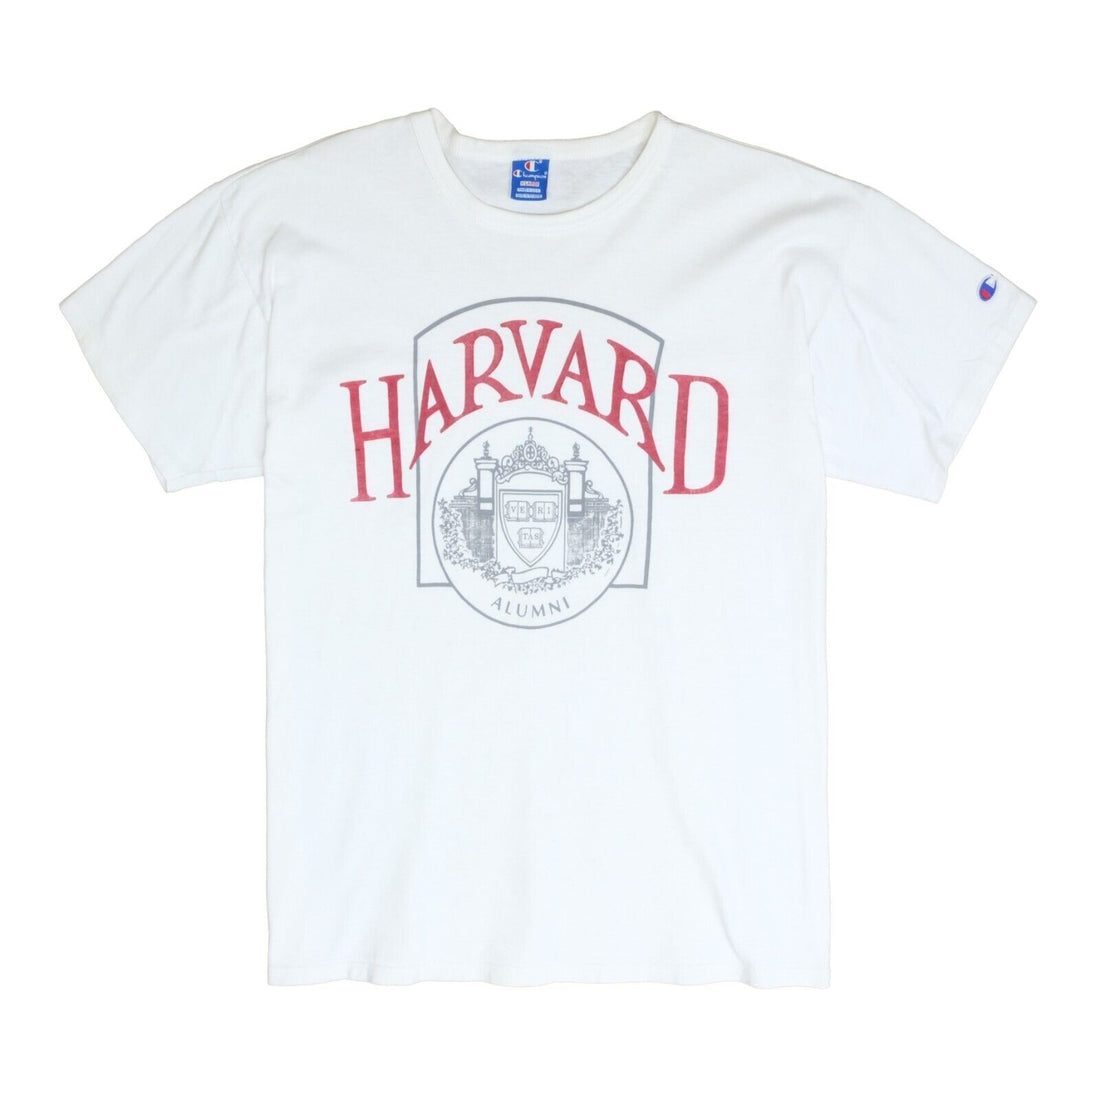 Vintage Harvard Crimson Crest Champion T-Shirt Size XL White 80s NCAA